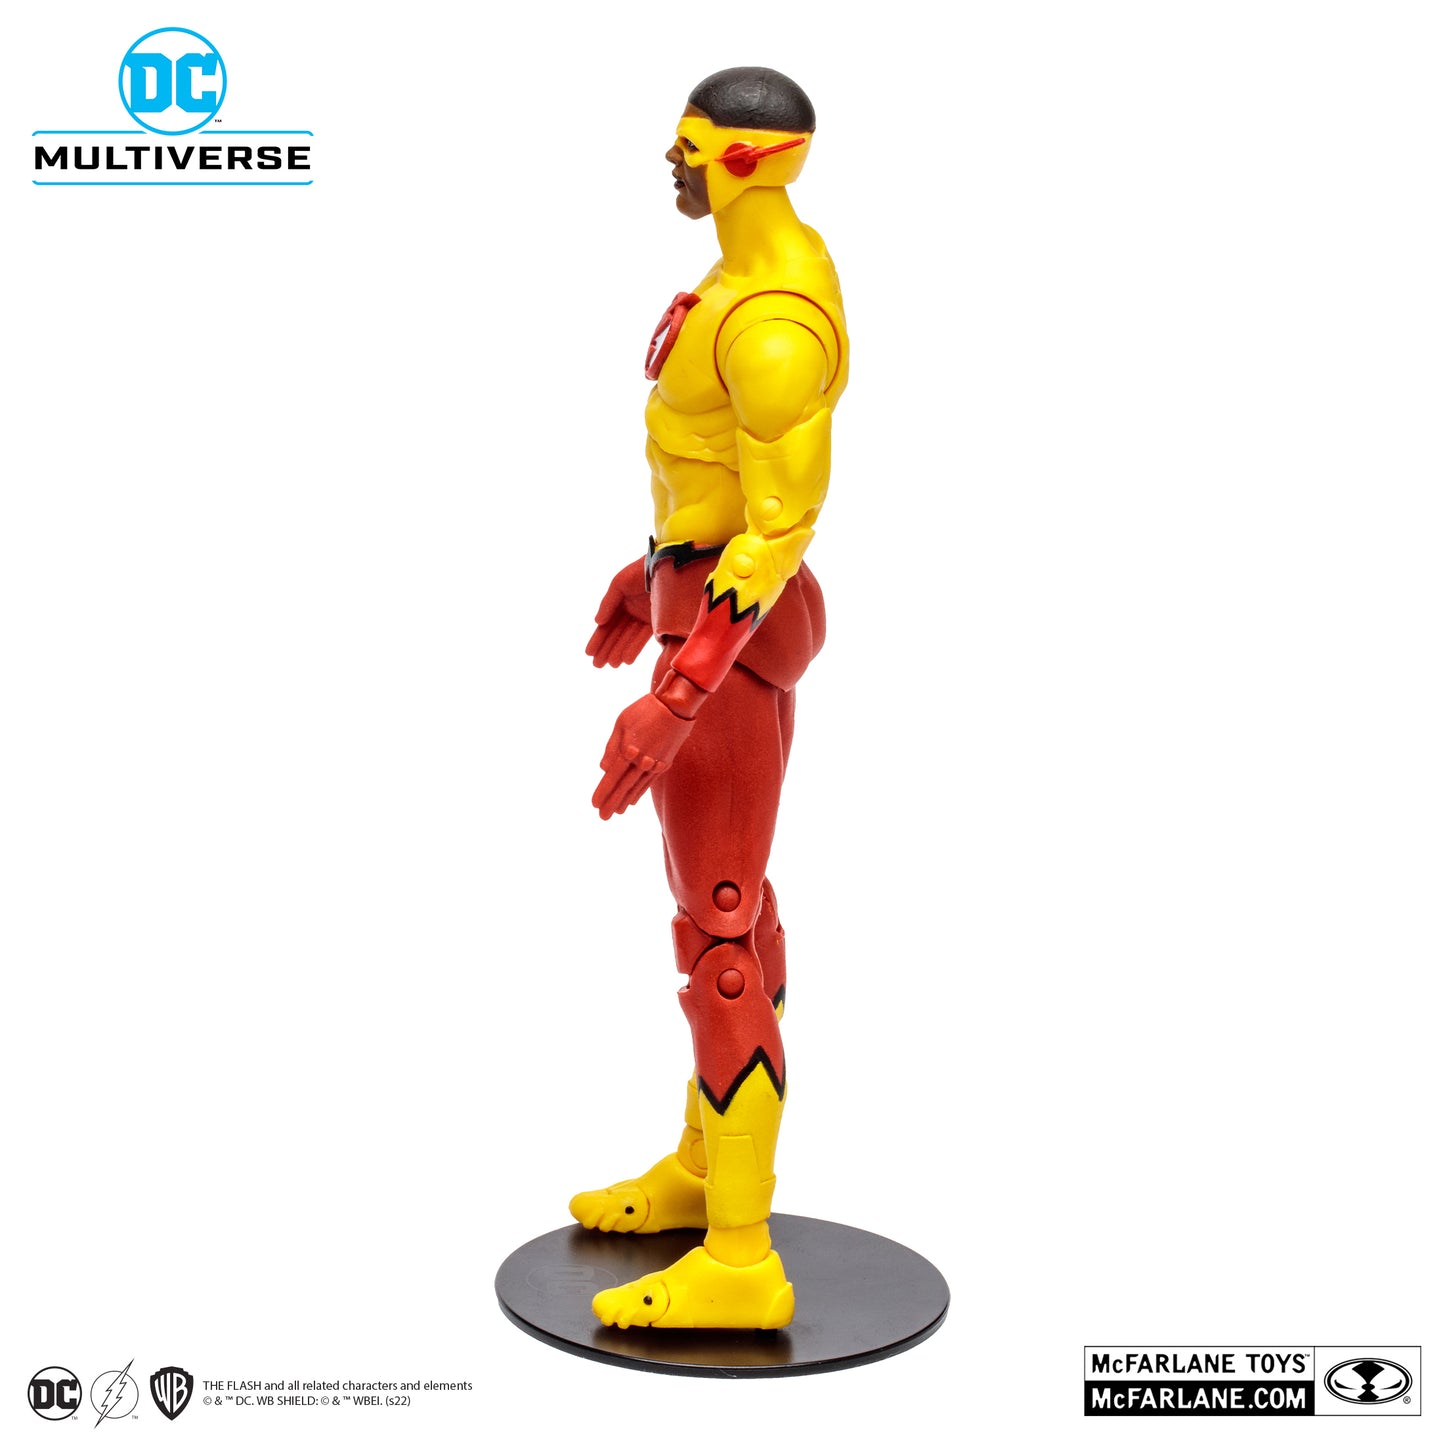 McFarlane Toys DC Multiverse - Kid Flash (Rebirth) [Gold Label]